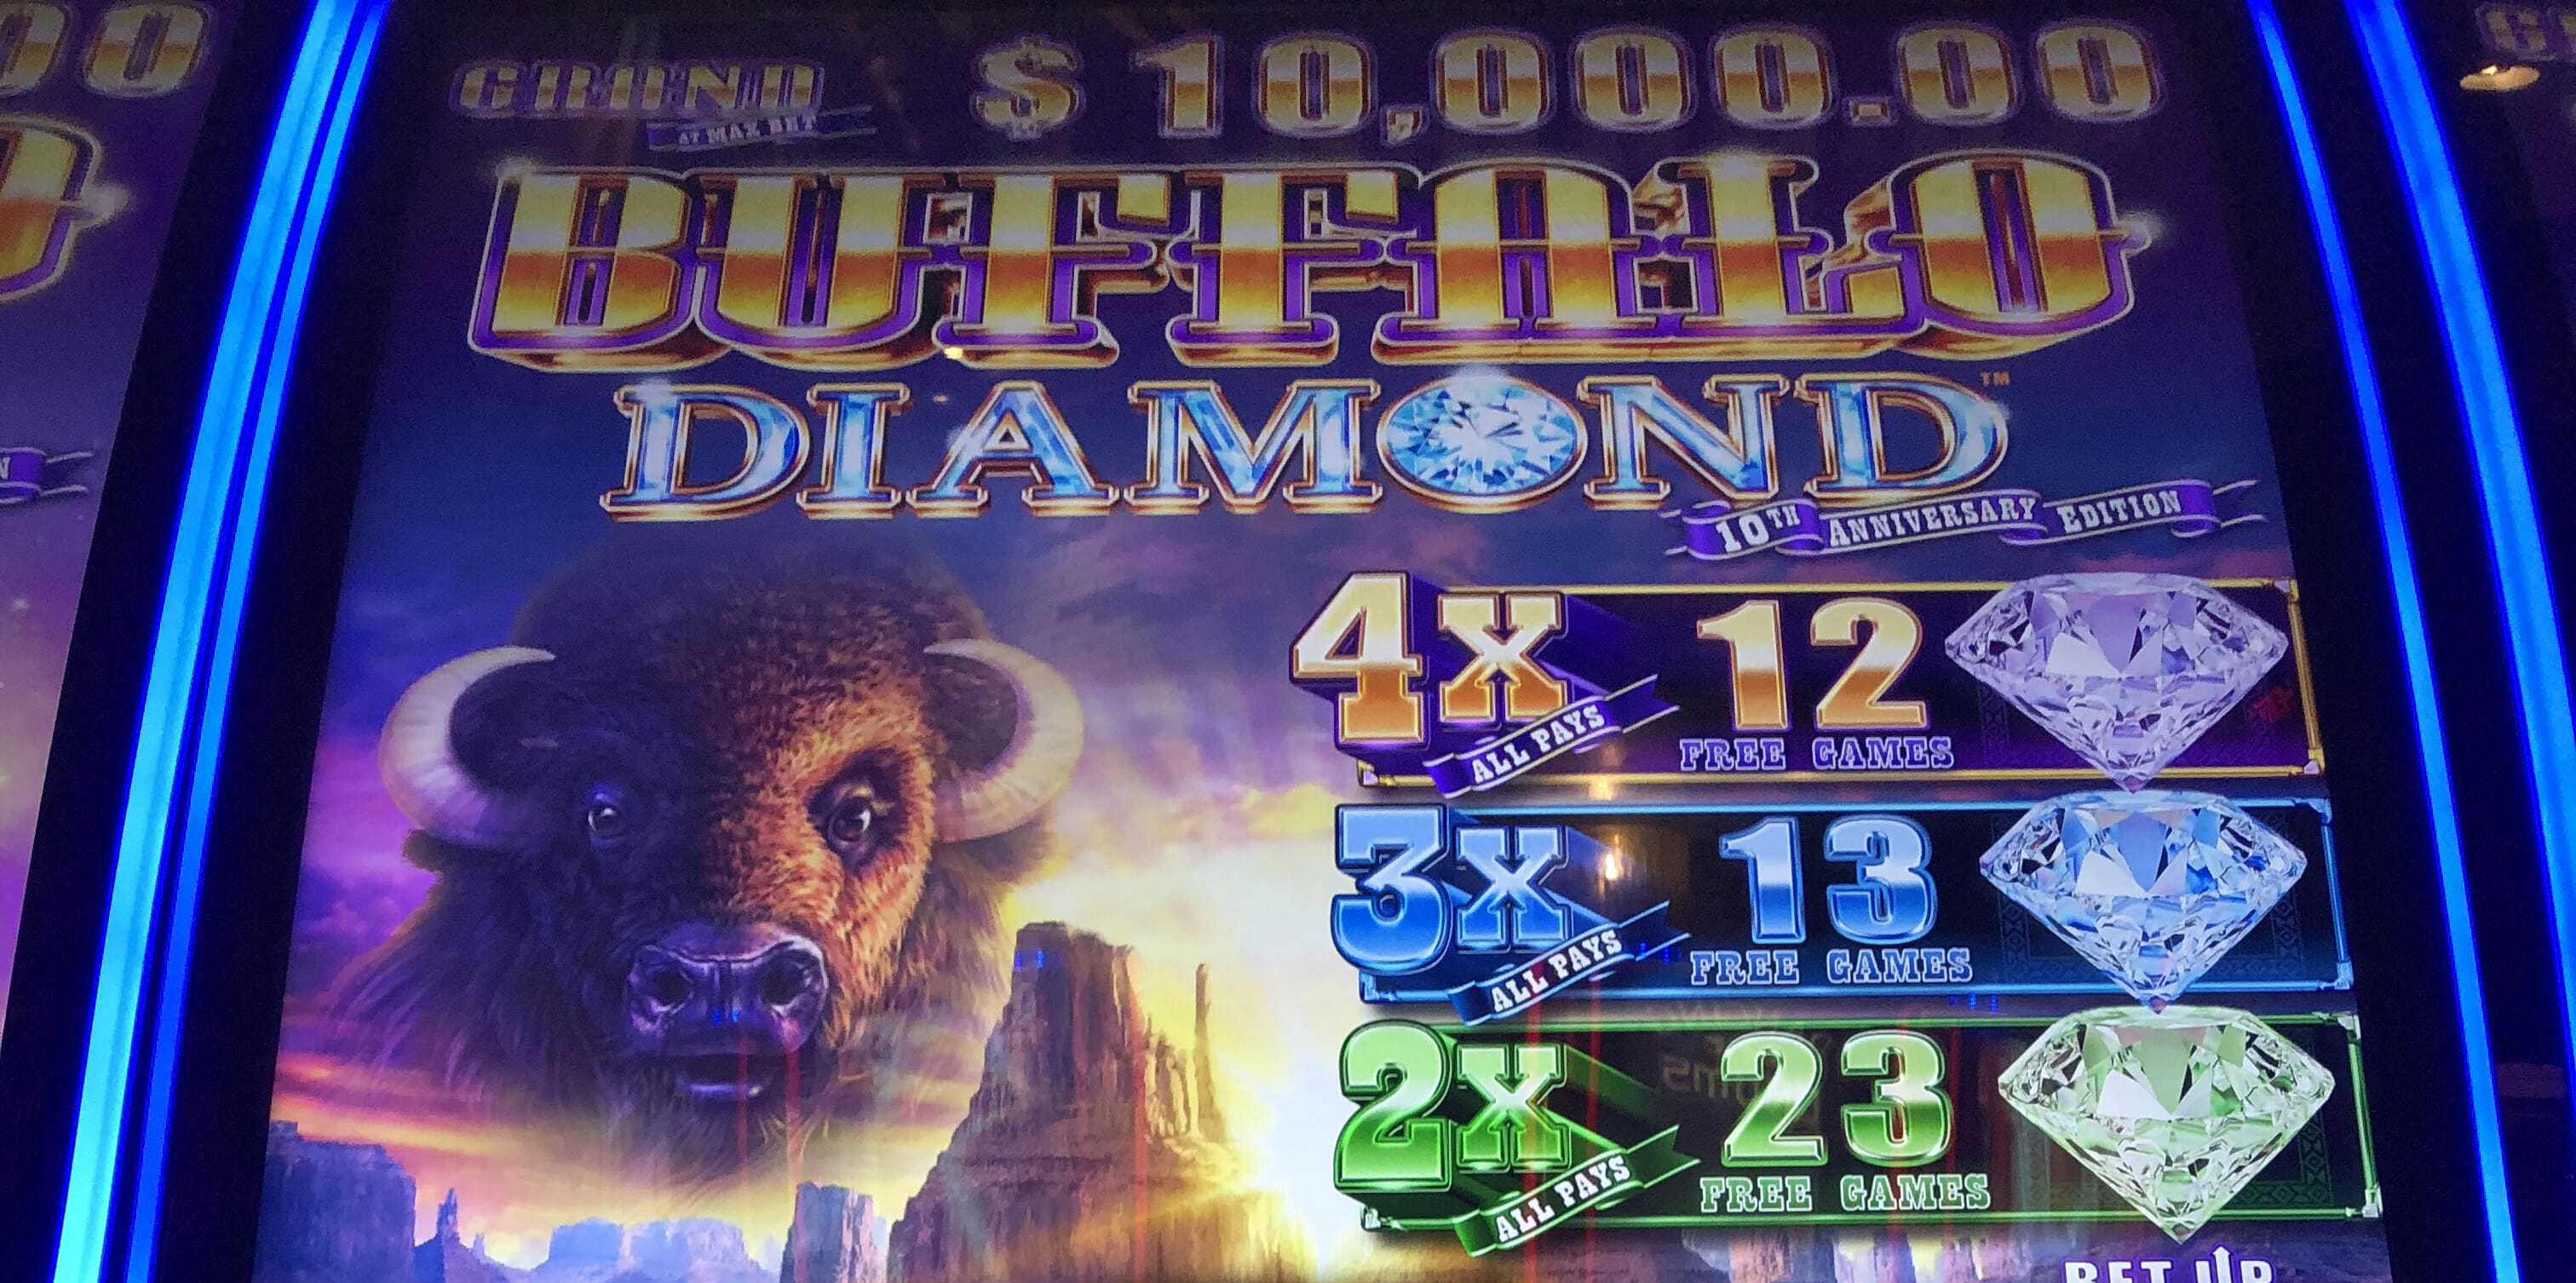 Casino Games Slots Download - Godmanchester In Bloom Slot Machine